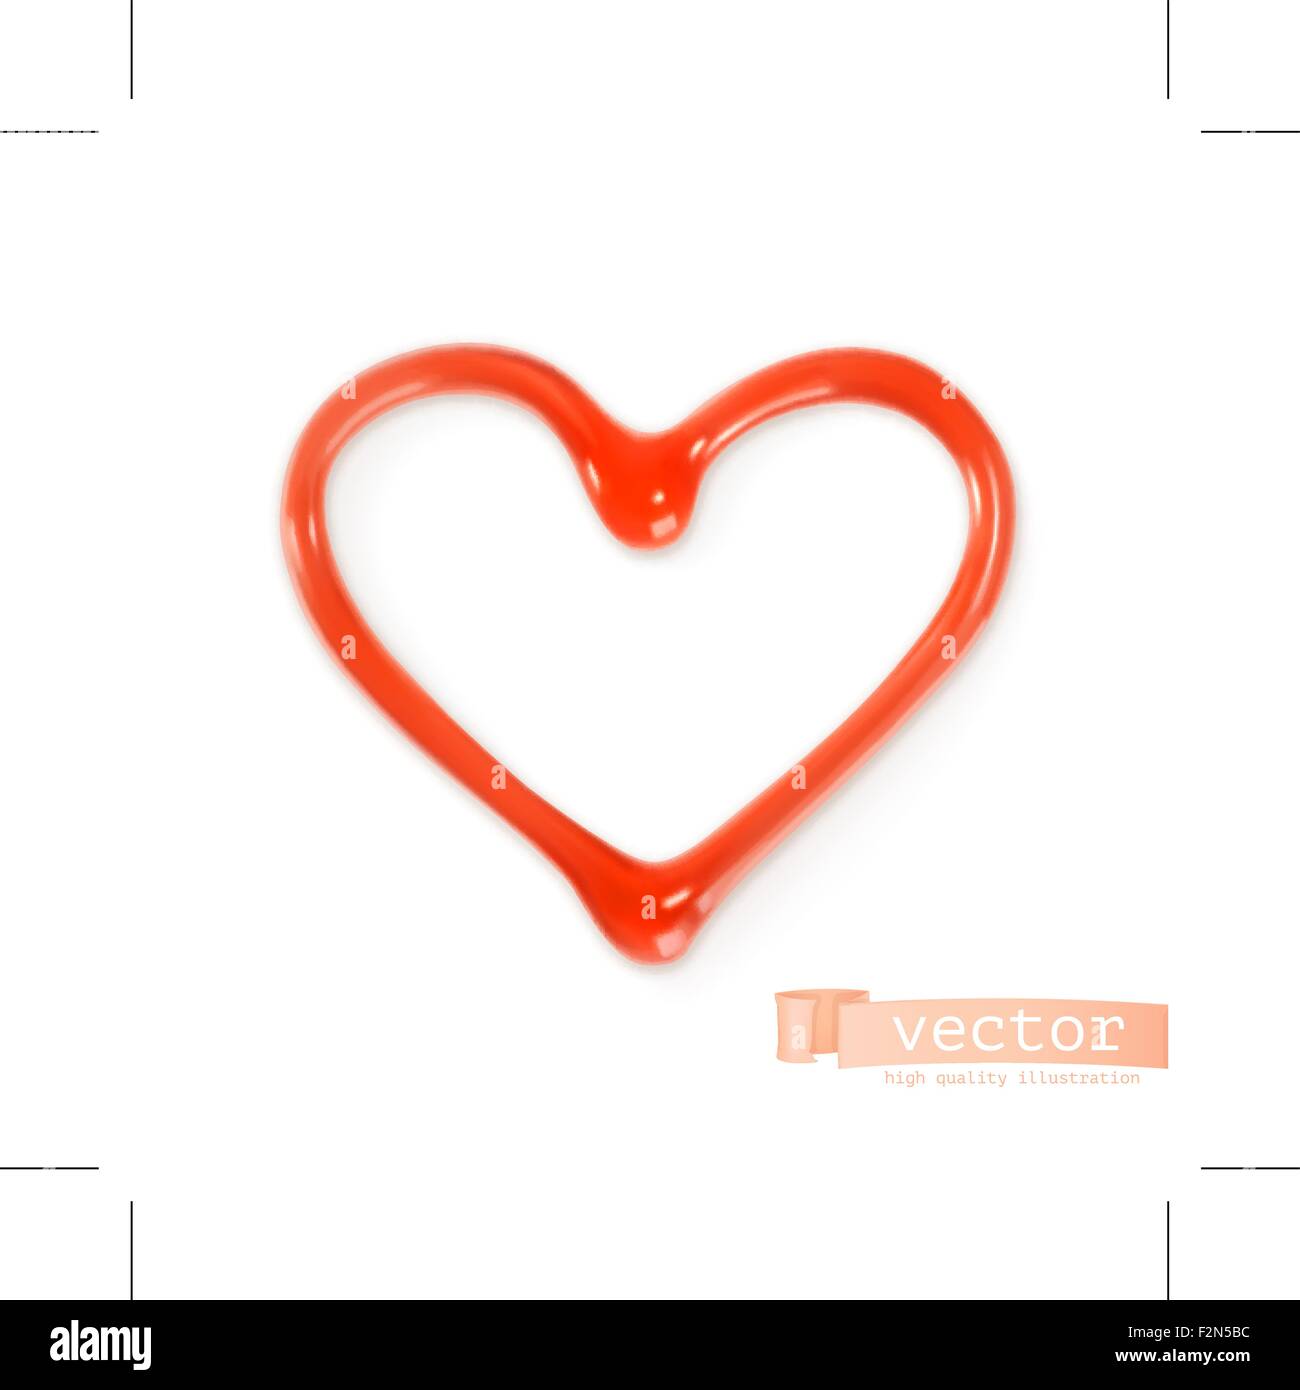 Sweet heart, vector illustration Stock Vector